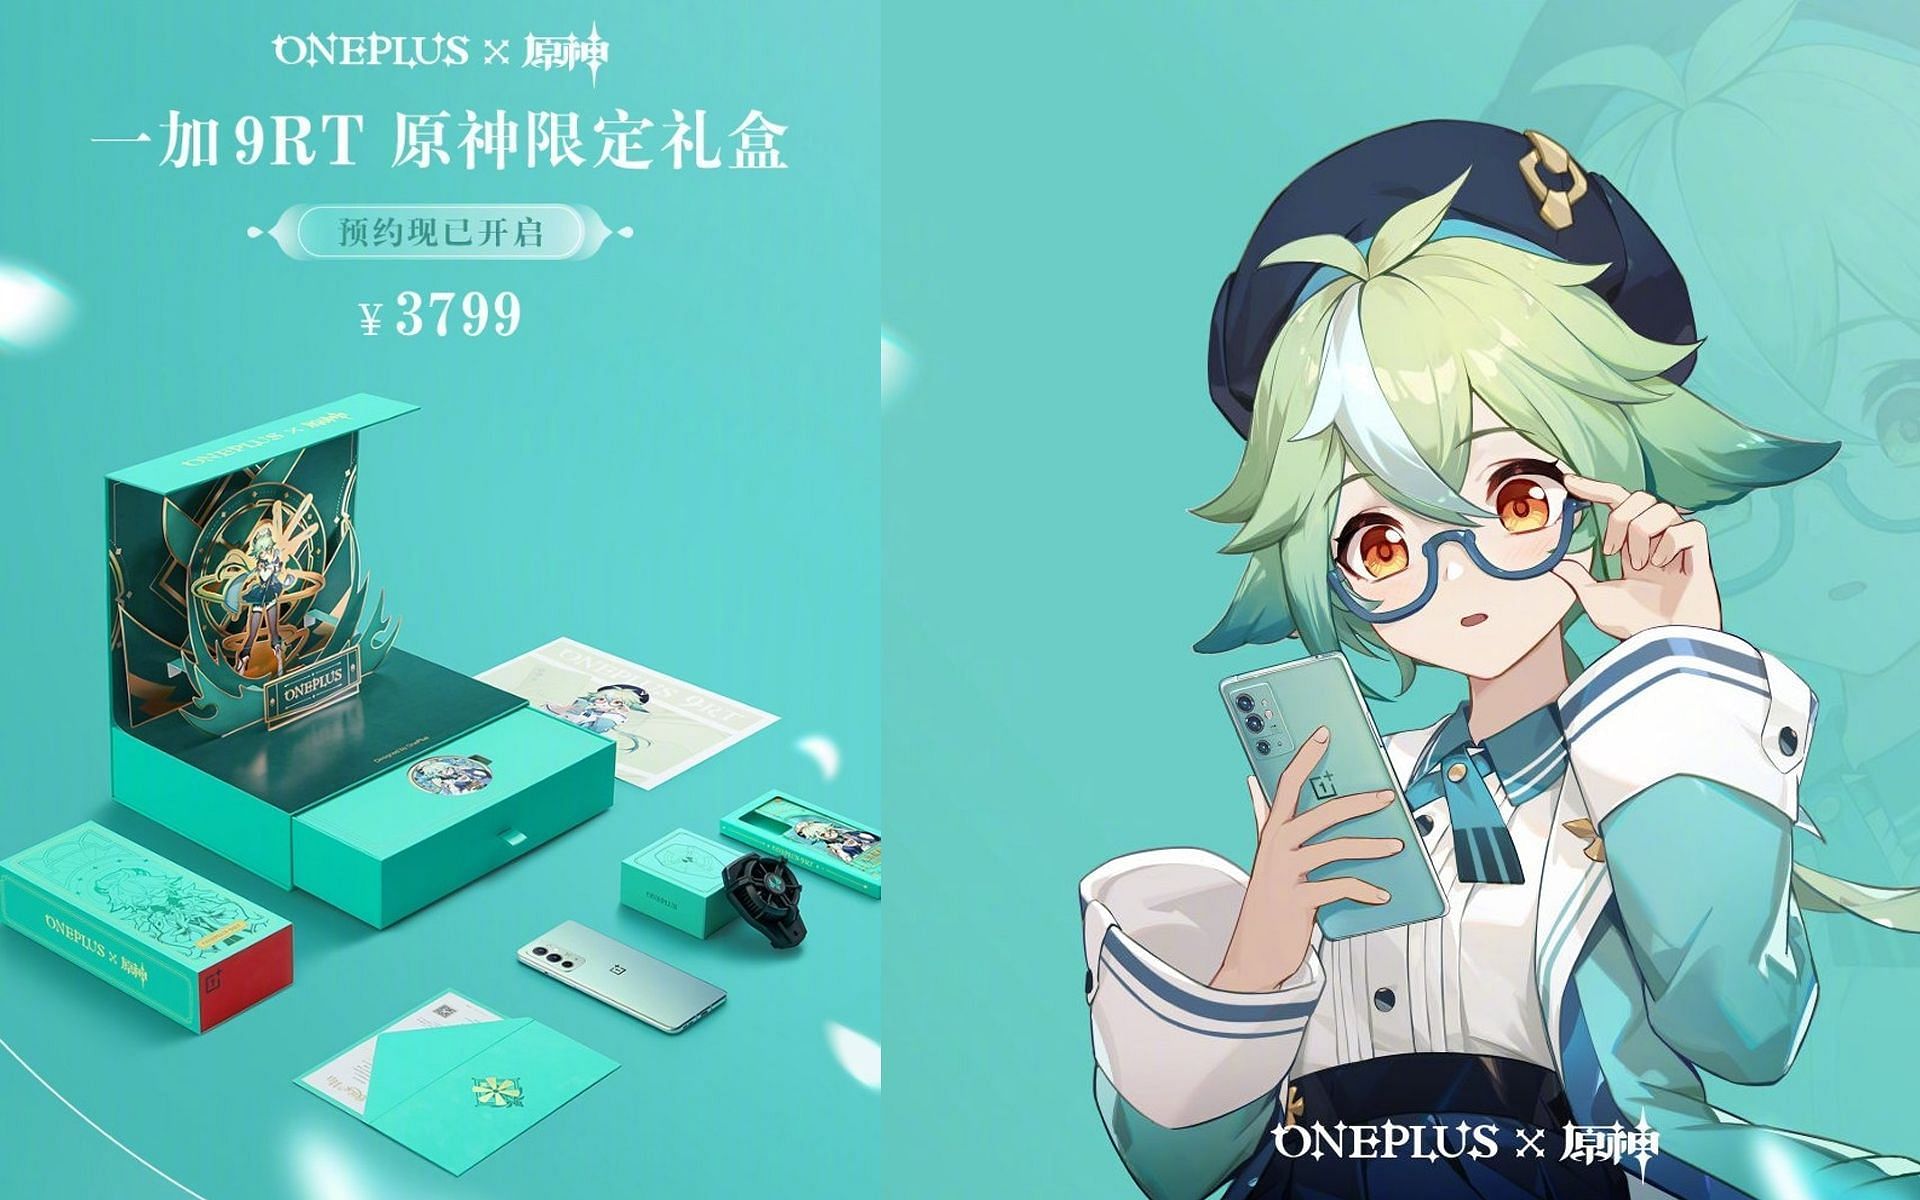 The Genshin Impact x OnePlus Sucrose-themed gift box (Image via OnePlus, Weibo)